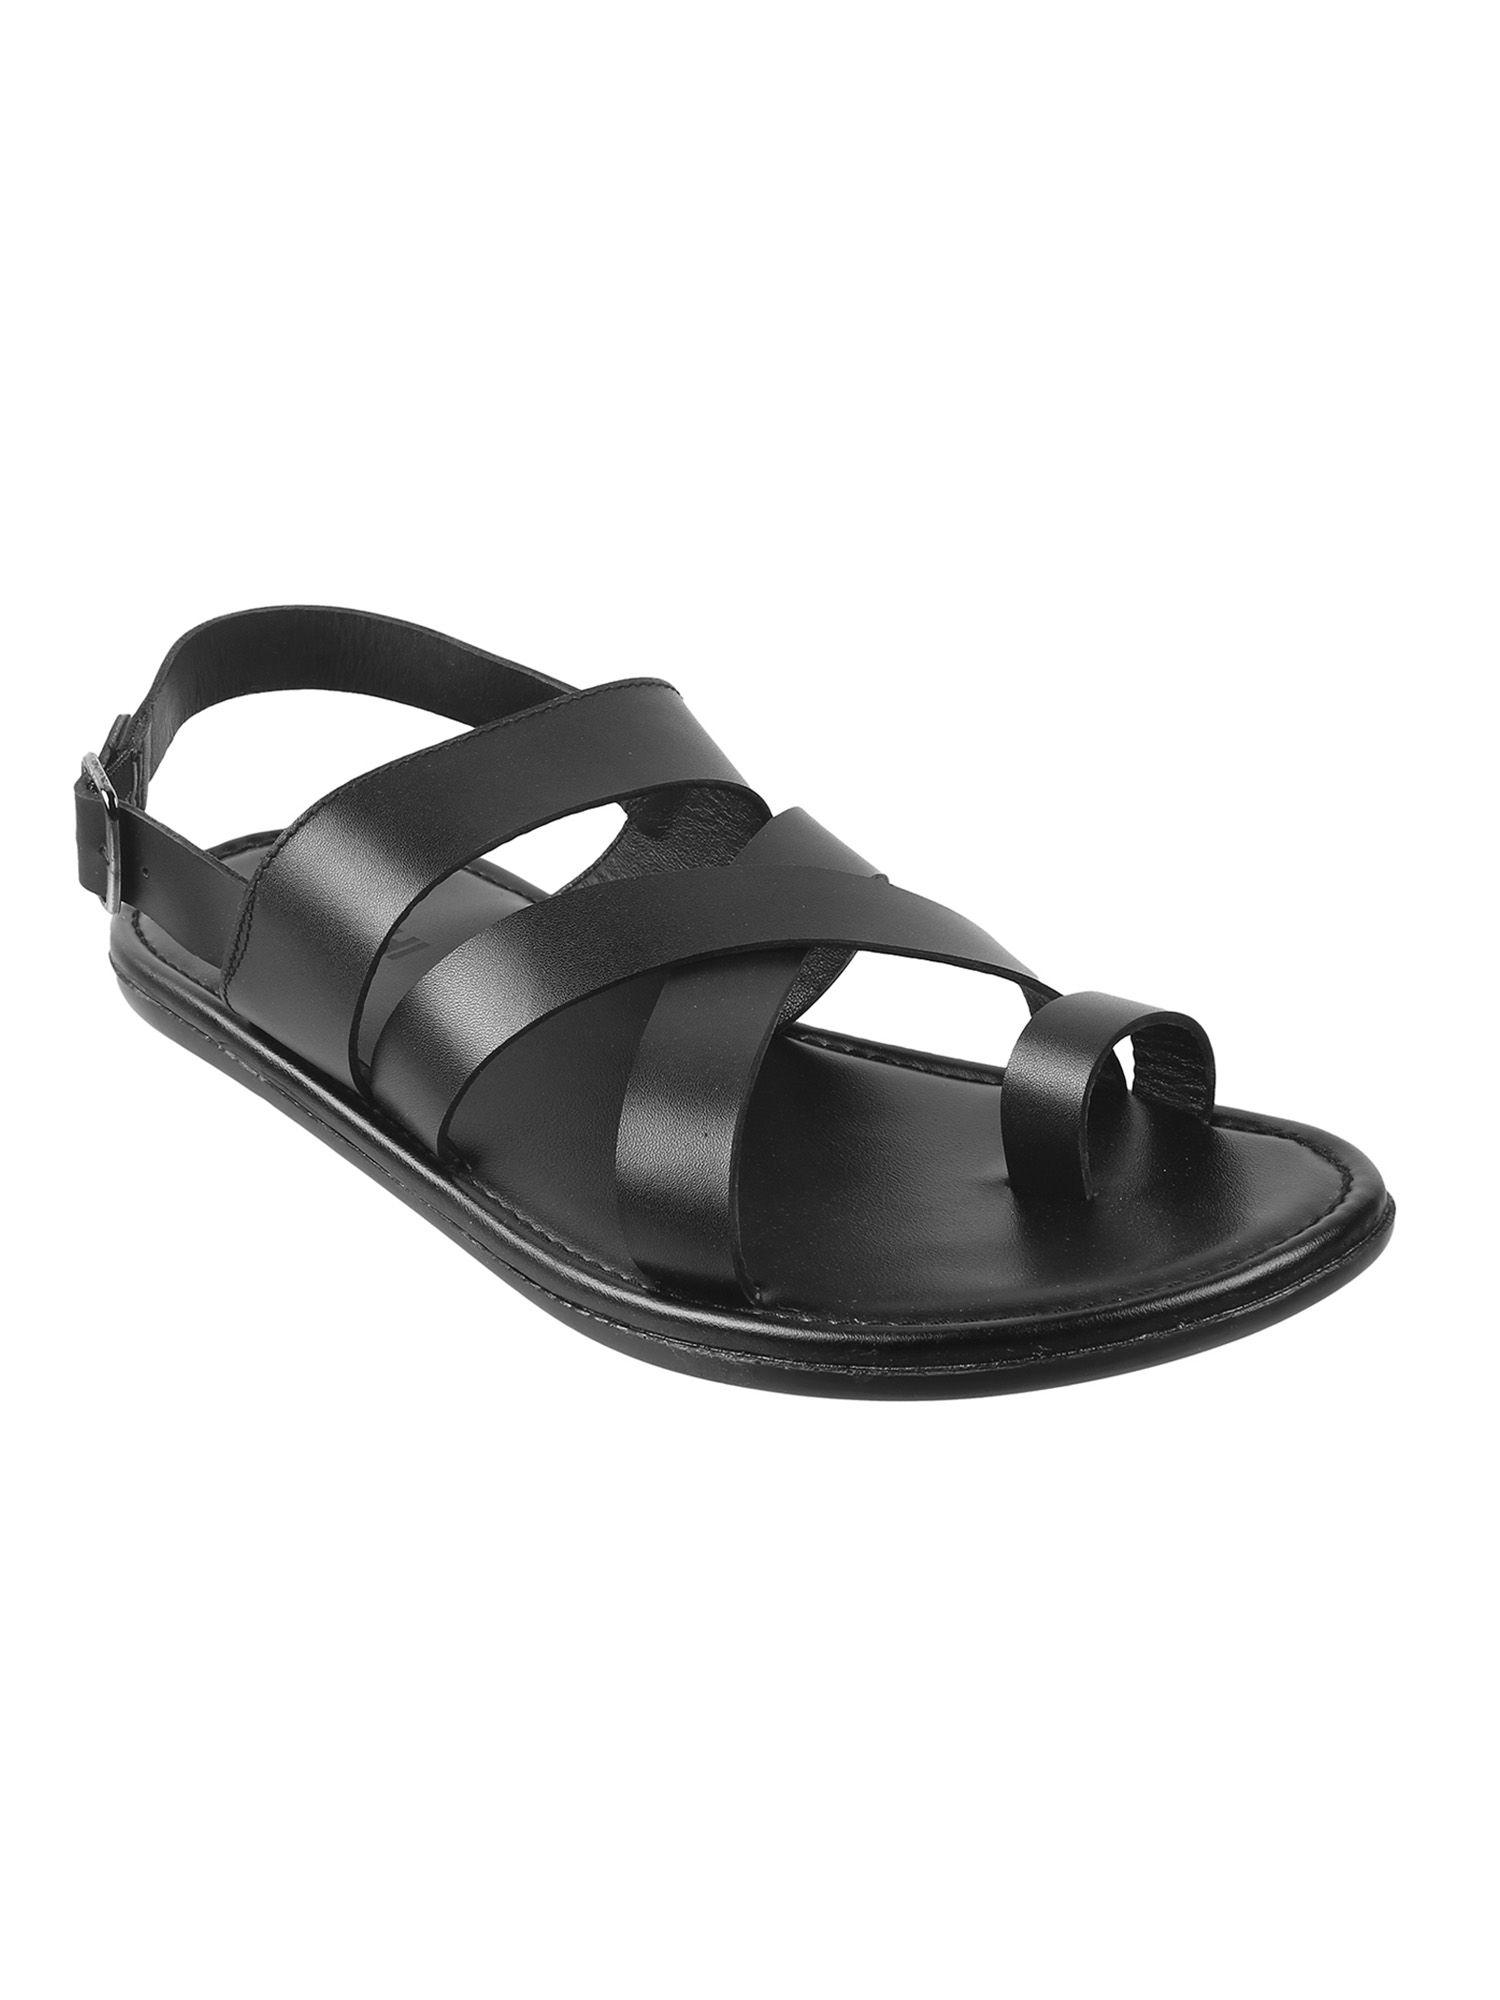 men's-black-sandals